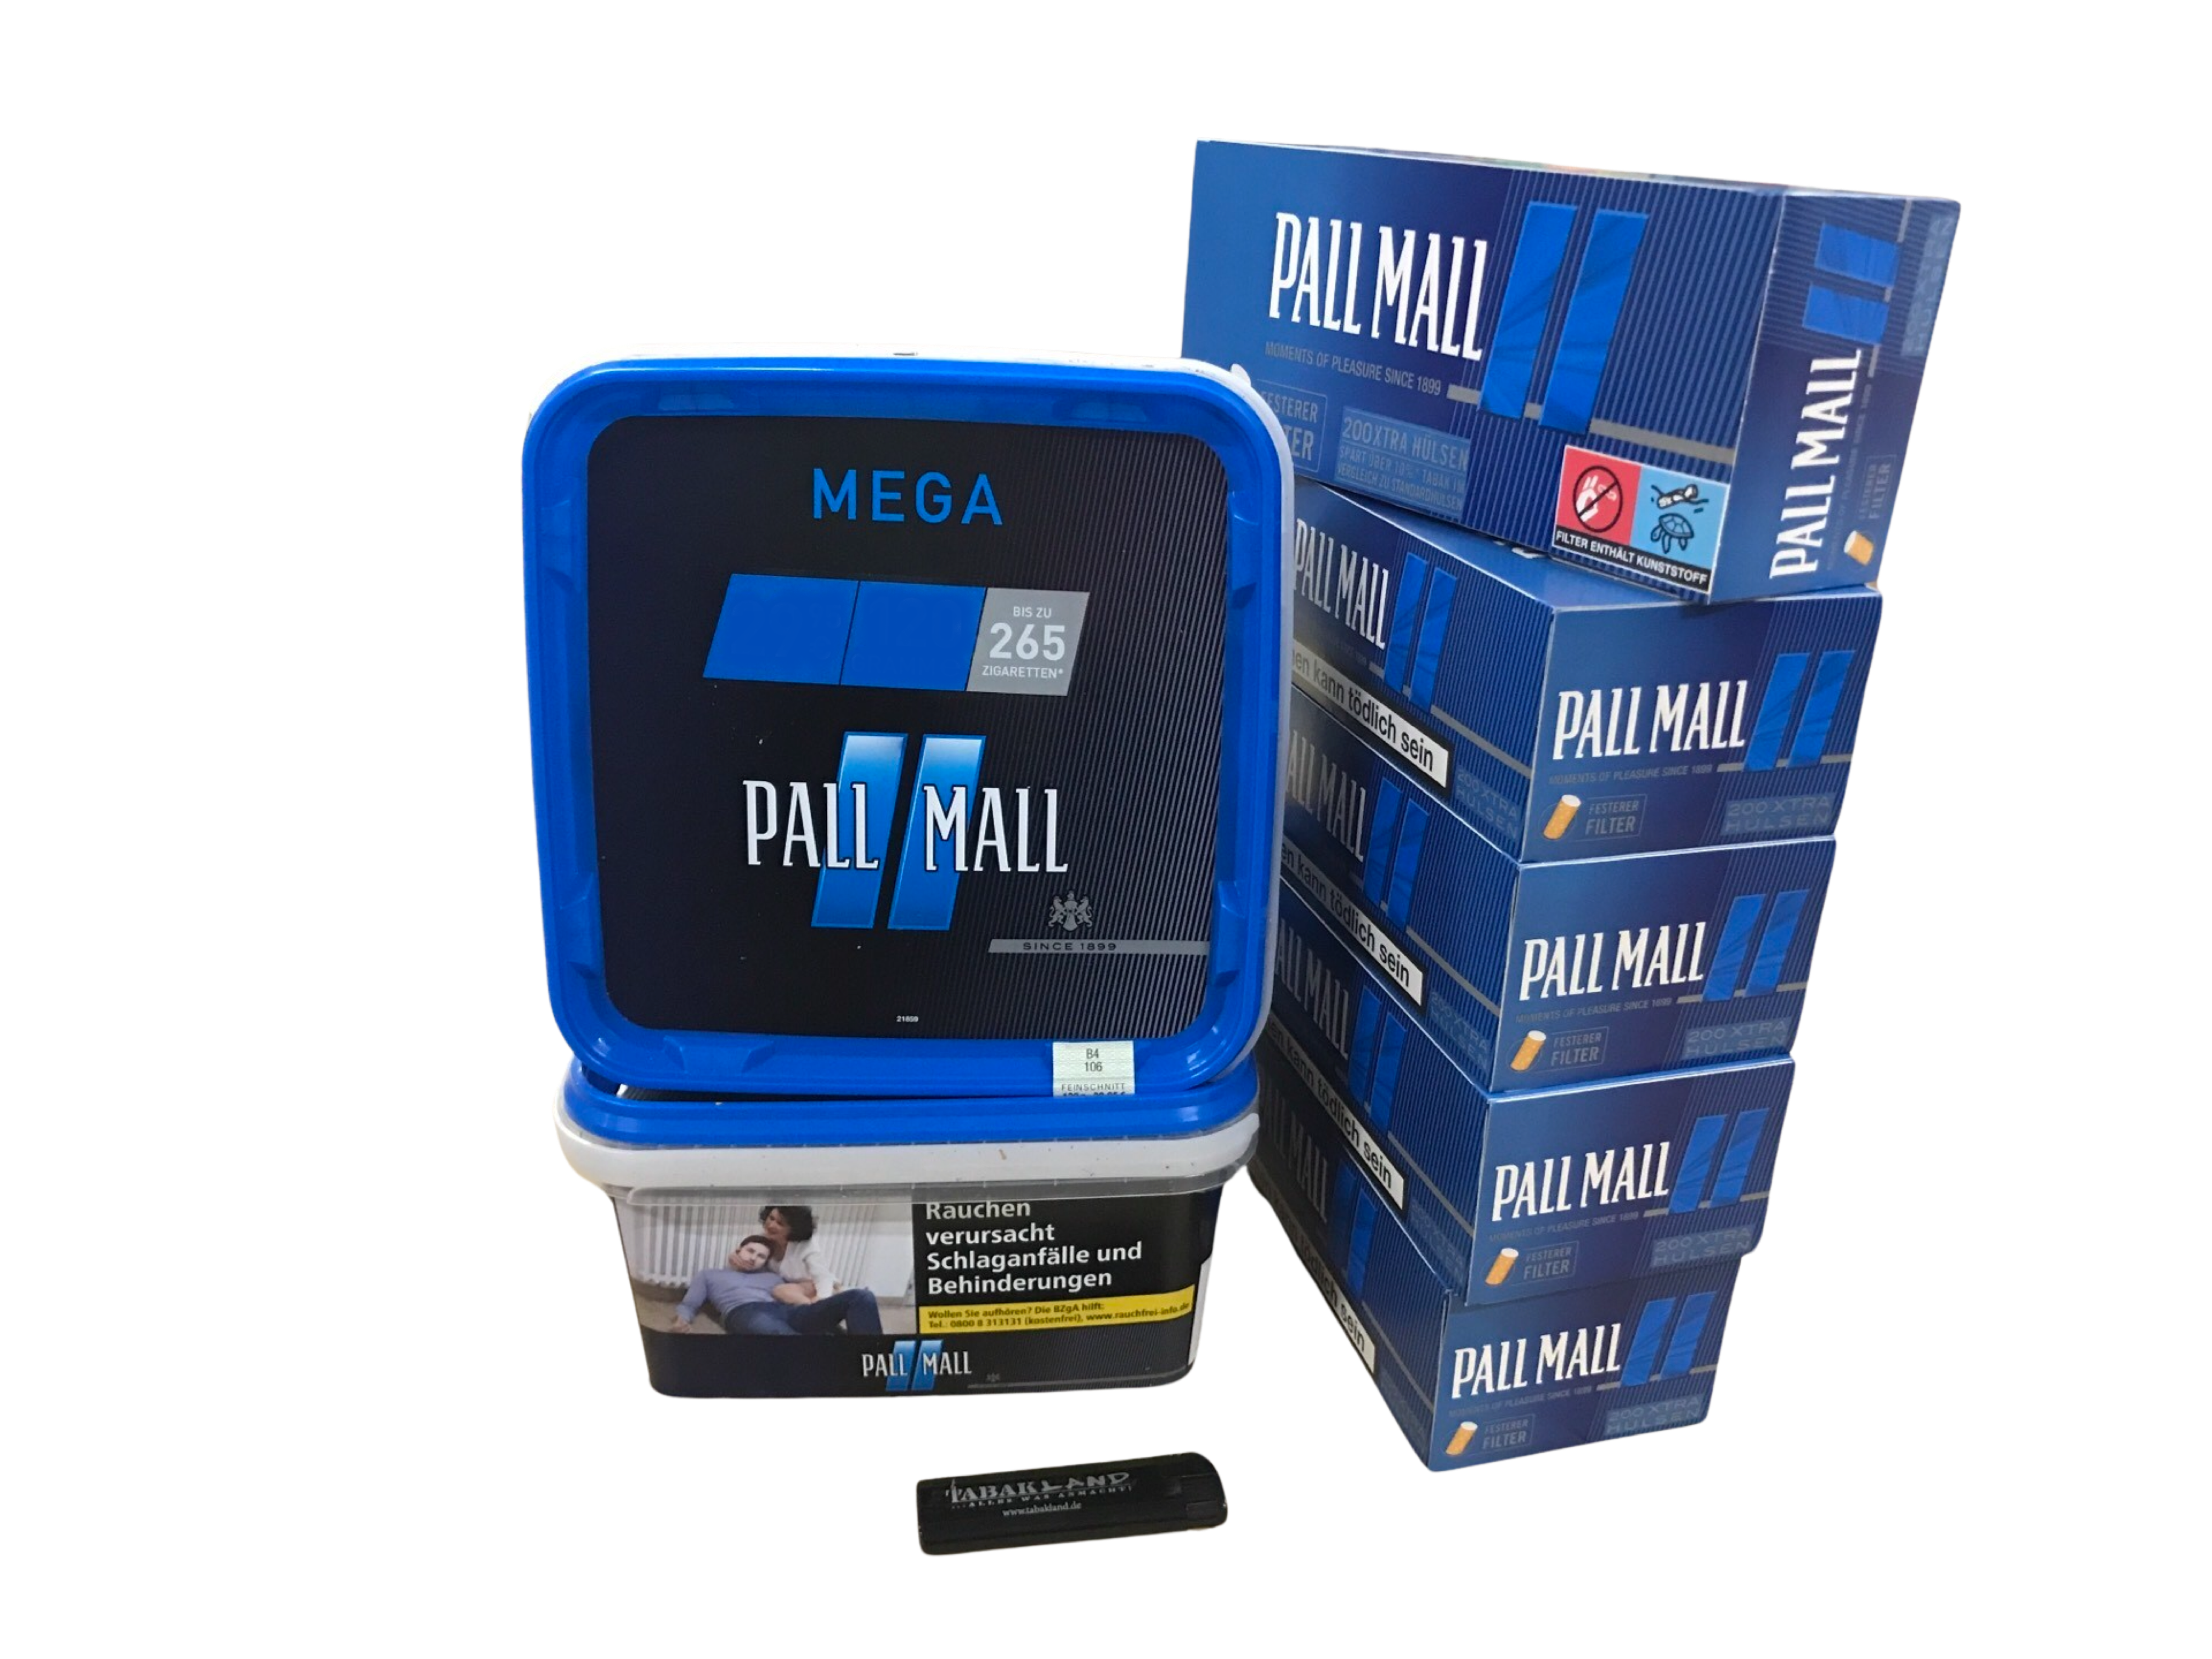 2x PALL MALL Blue Mega Eimer 120g + 1000 PALL MALL Blau Hülsen + Feuerzeug